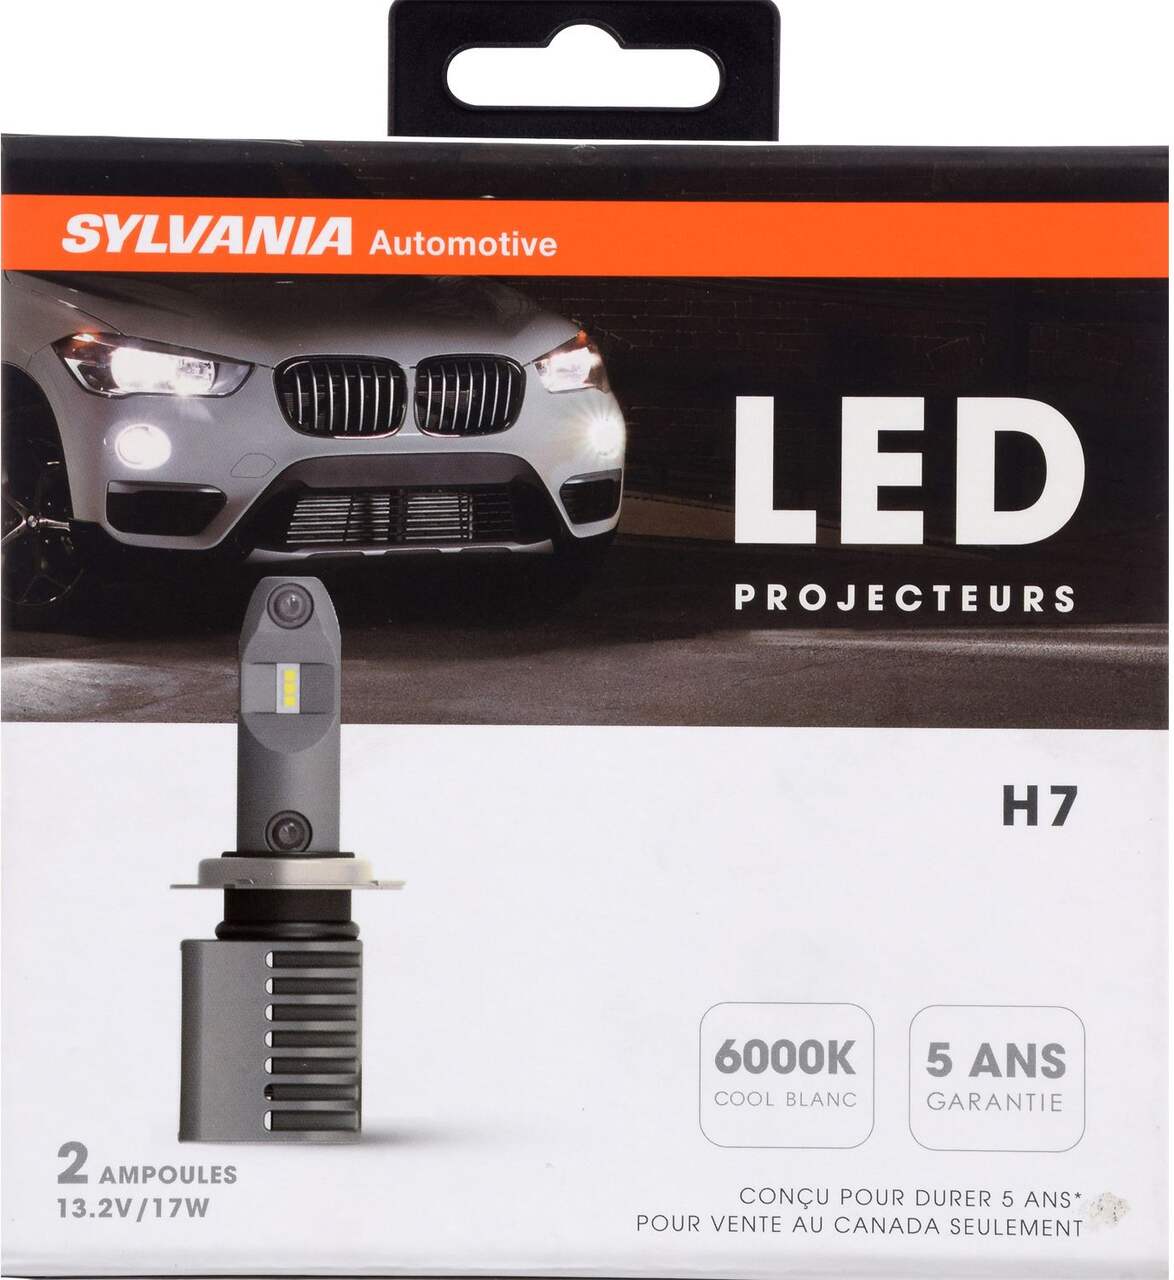 Sylvania H7 Basic Auto Halogen Headlight Bulb, Pack of 1